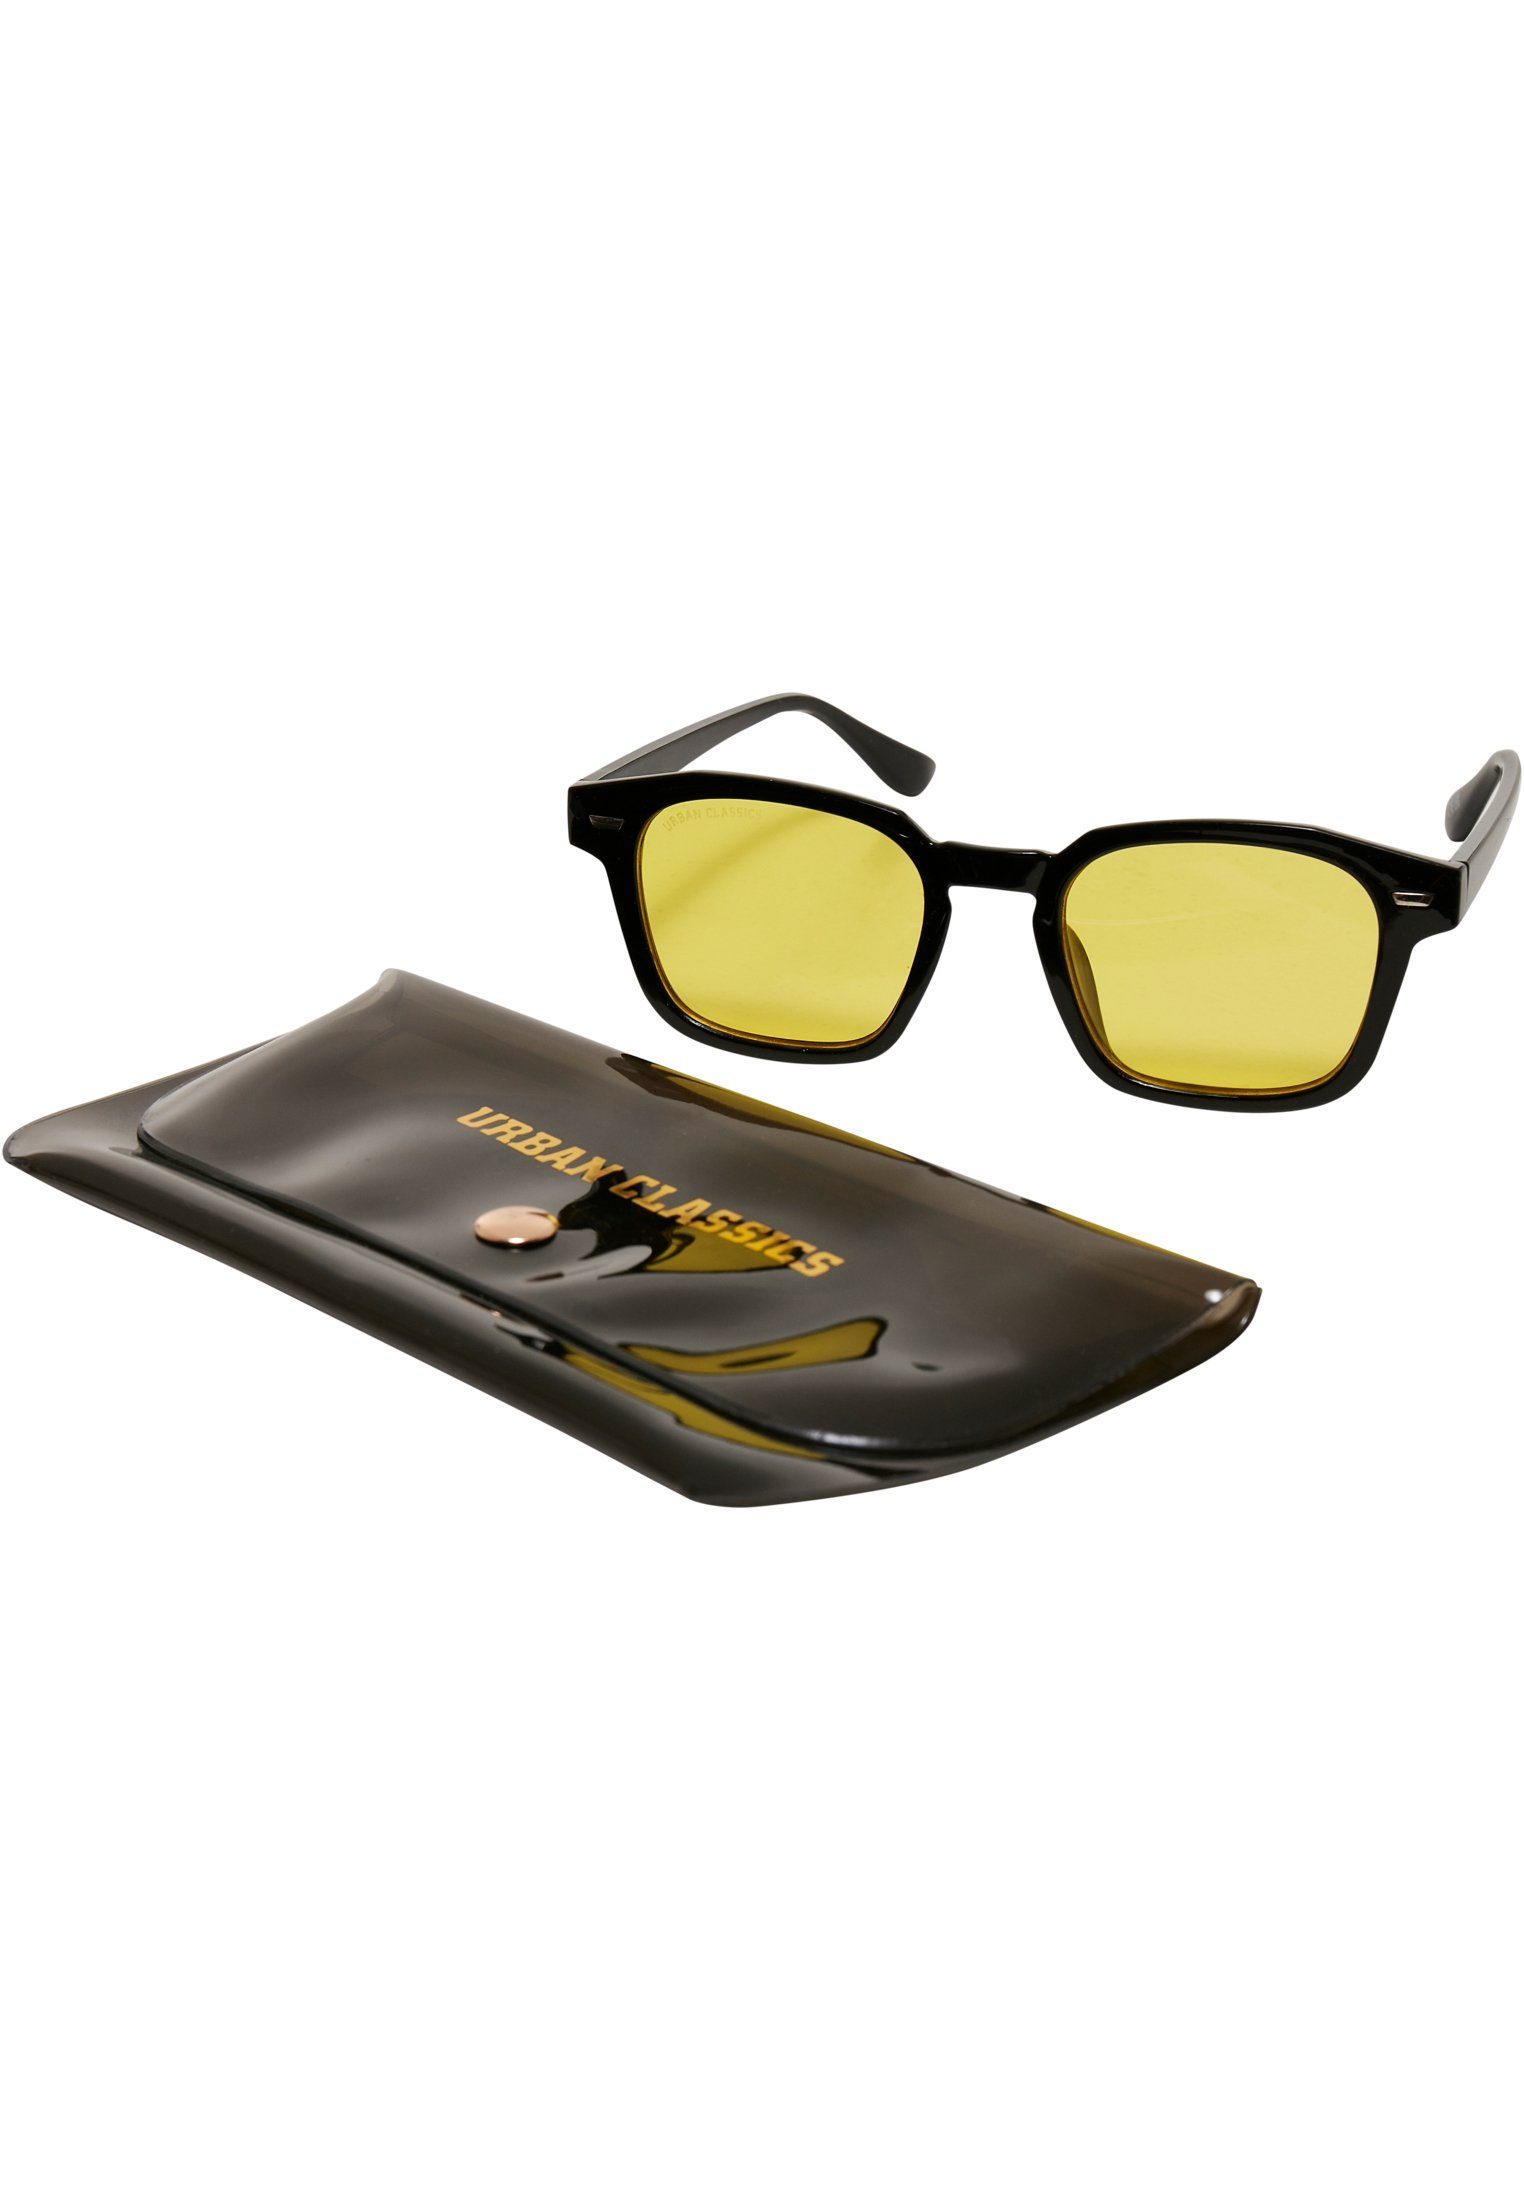 URBAN CLASSICS Sonnenbrille Unisex Sunglasses With Case black/yellow Maui